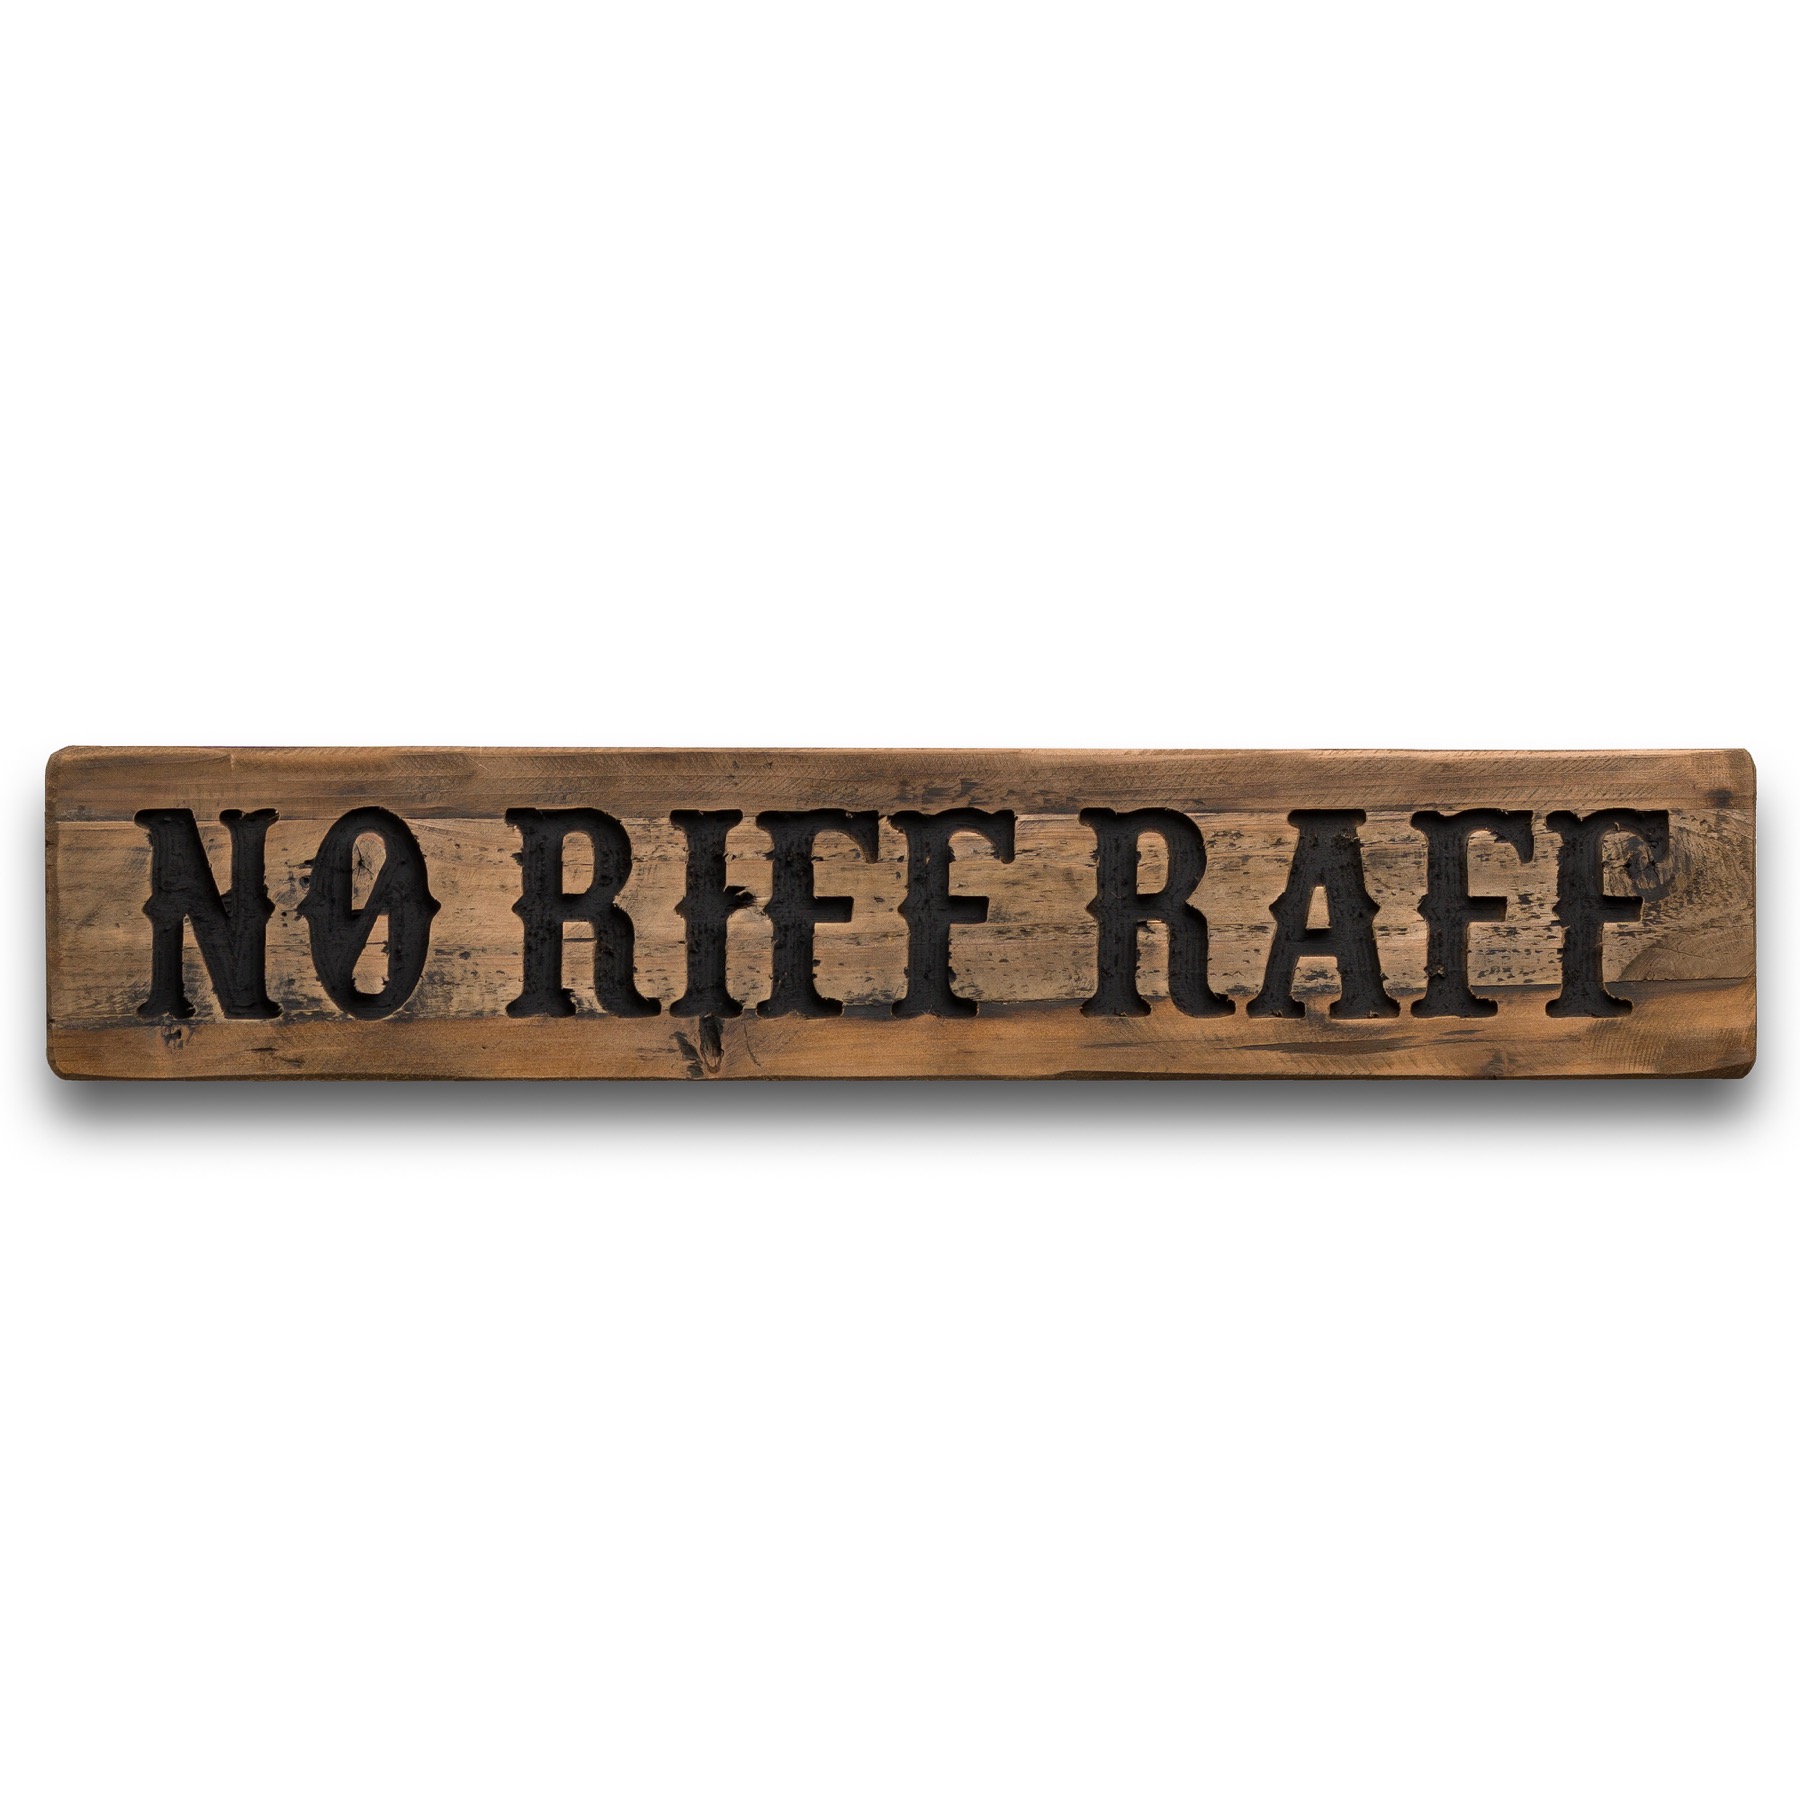 No Riff Raff Rustic Wooden Message Plaque - Image 1